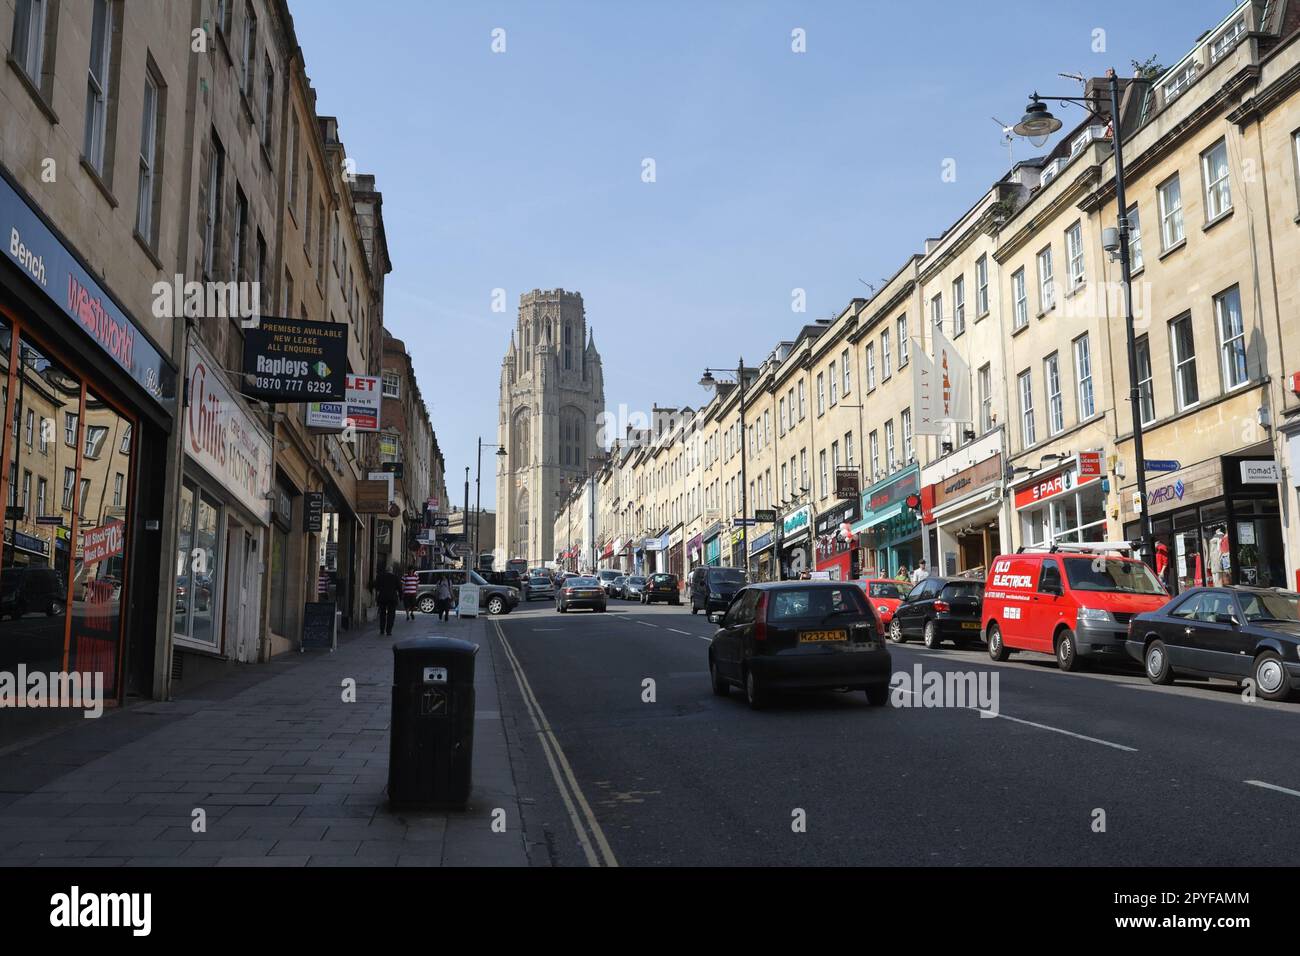 Park street in Bristol city centre, England UK, Shops in Georgian buildings Stock Photo